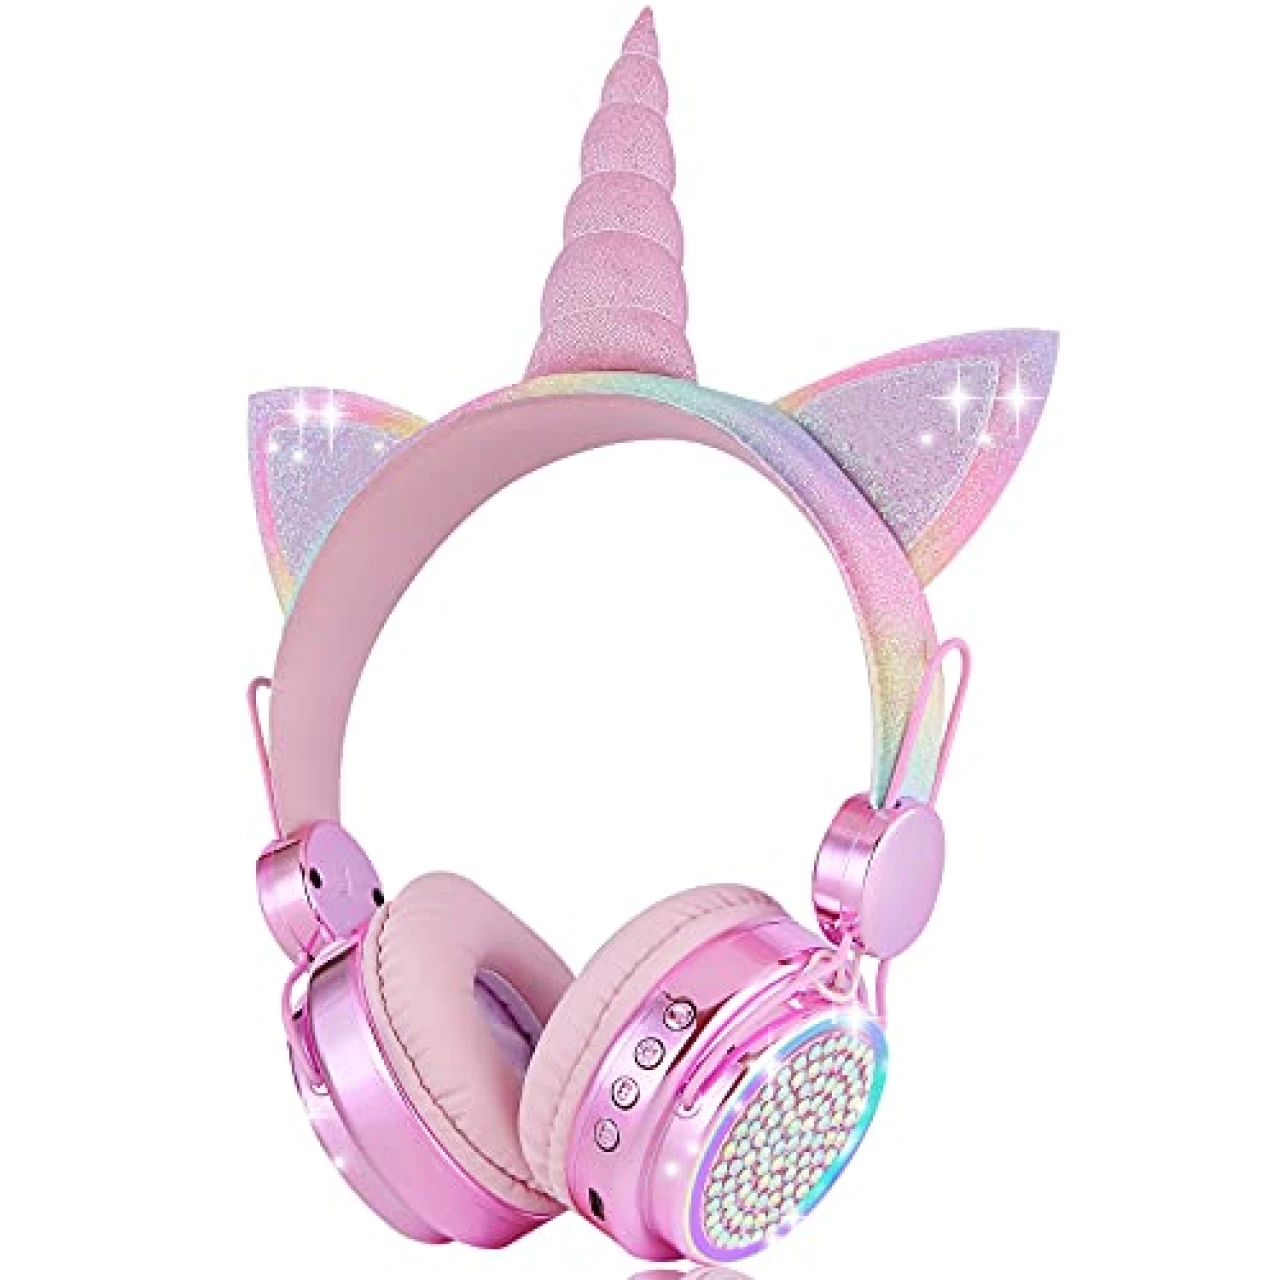 KORABA Kids Wireless Headphones for Girls Children Teens, LED Light Up Bluetooth Unicorn Headphones with Microphone (Pink Wireless)